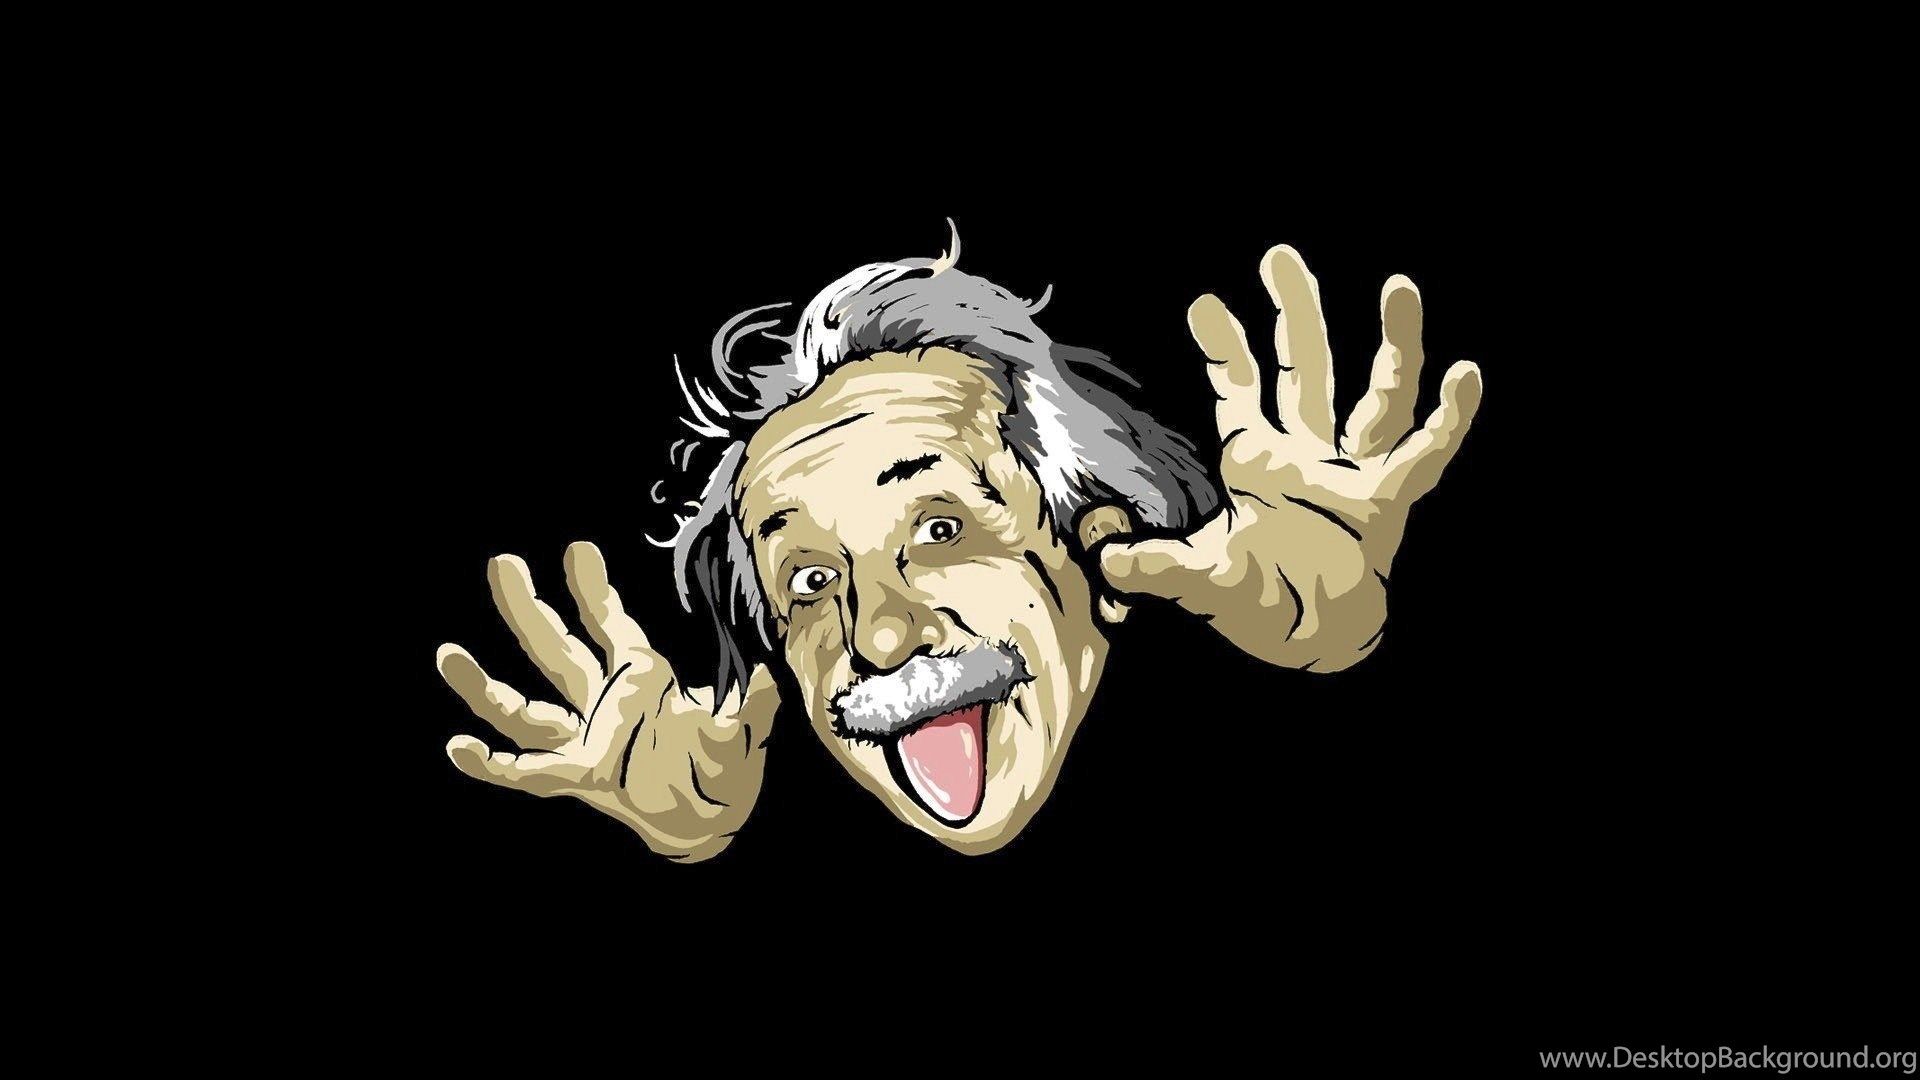 Wallpaper Funny Face Cover Cartoon Albert Einstein Black Wallpaper. Desktop Background